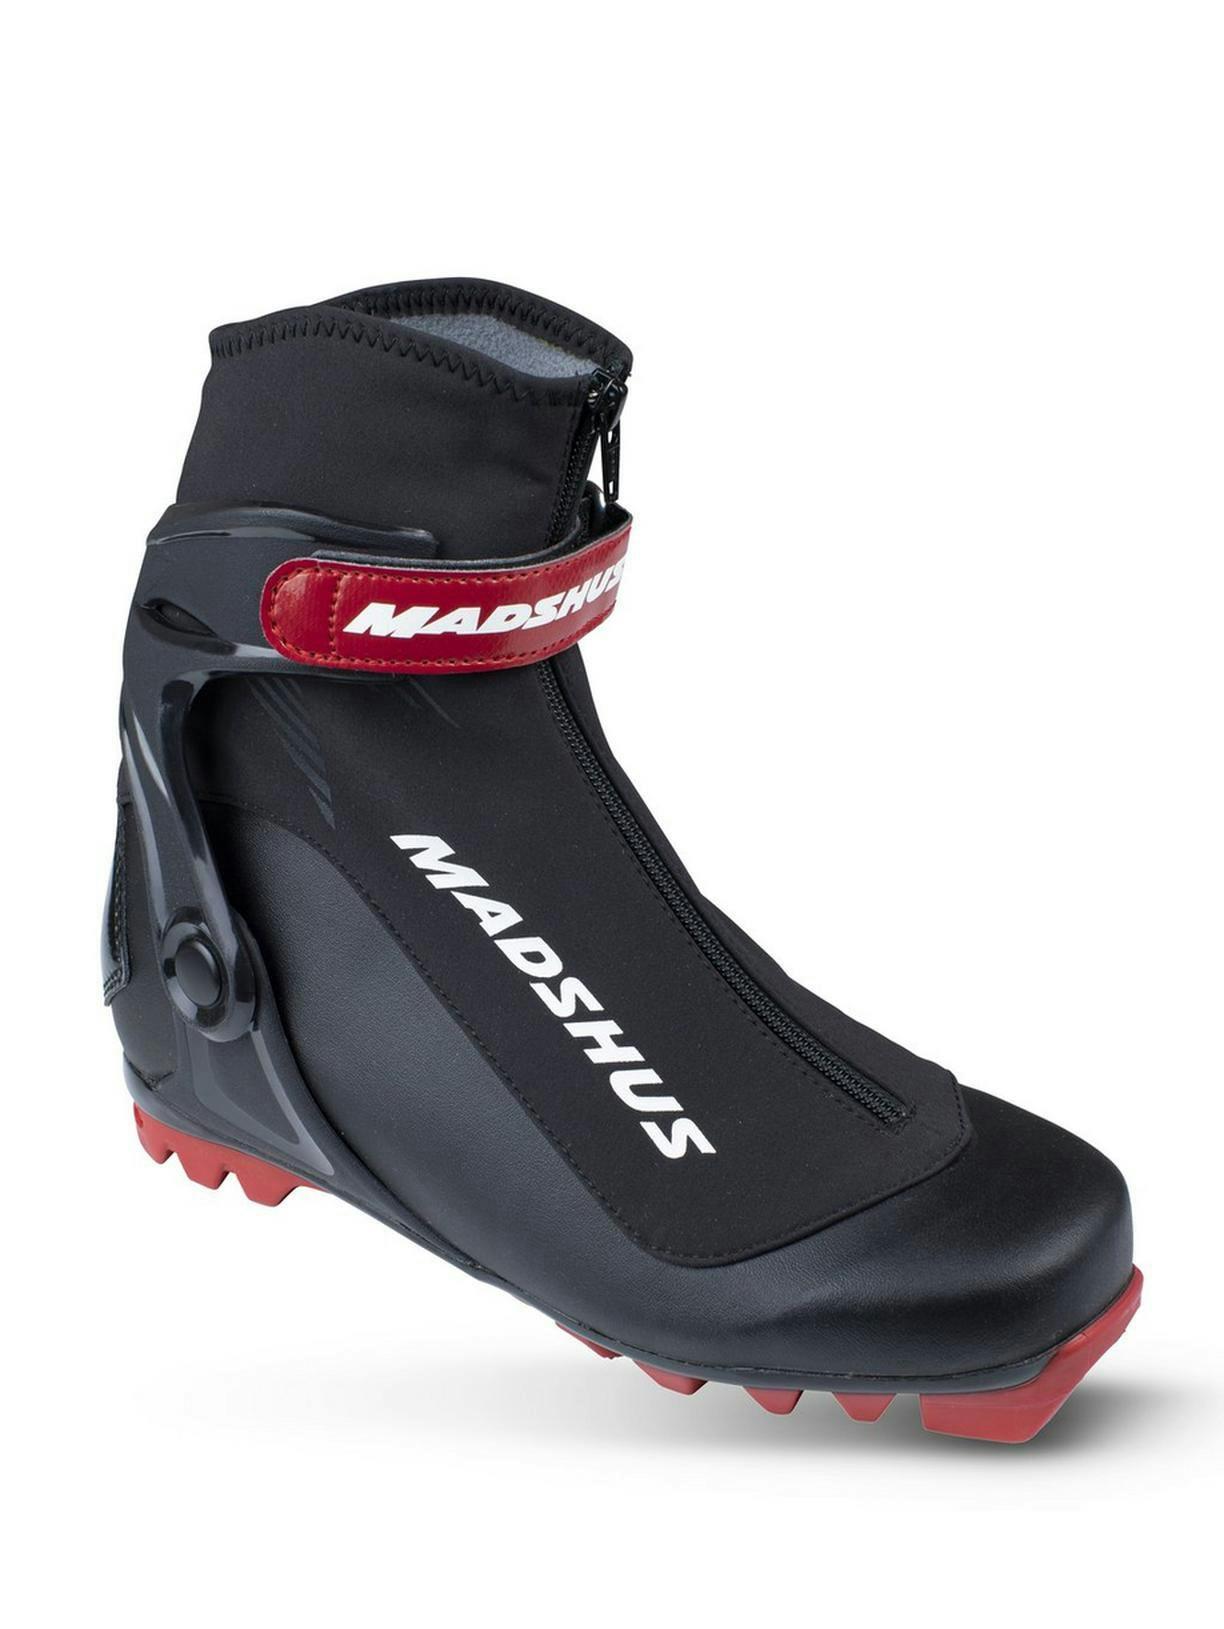 Madshus Endurace S Ski Boots · 2022